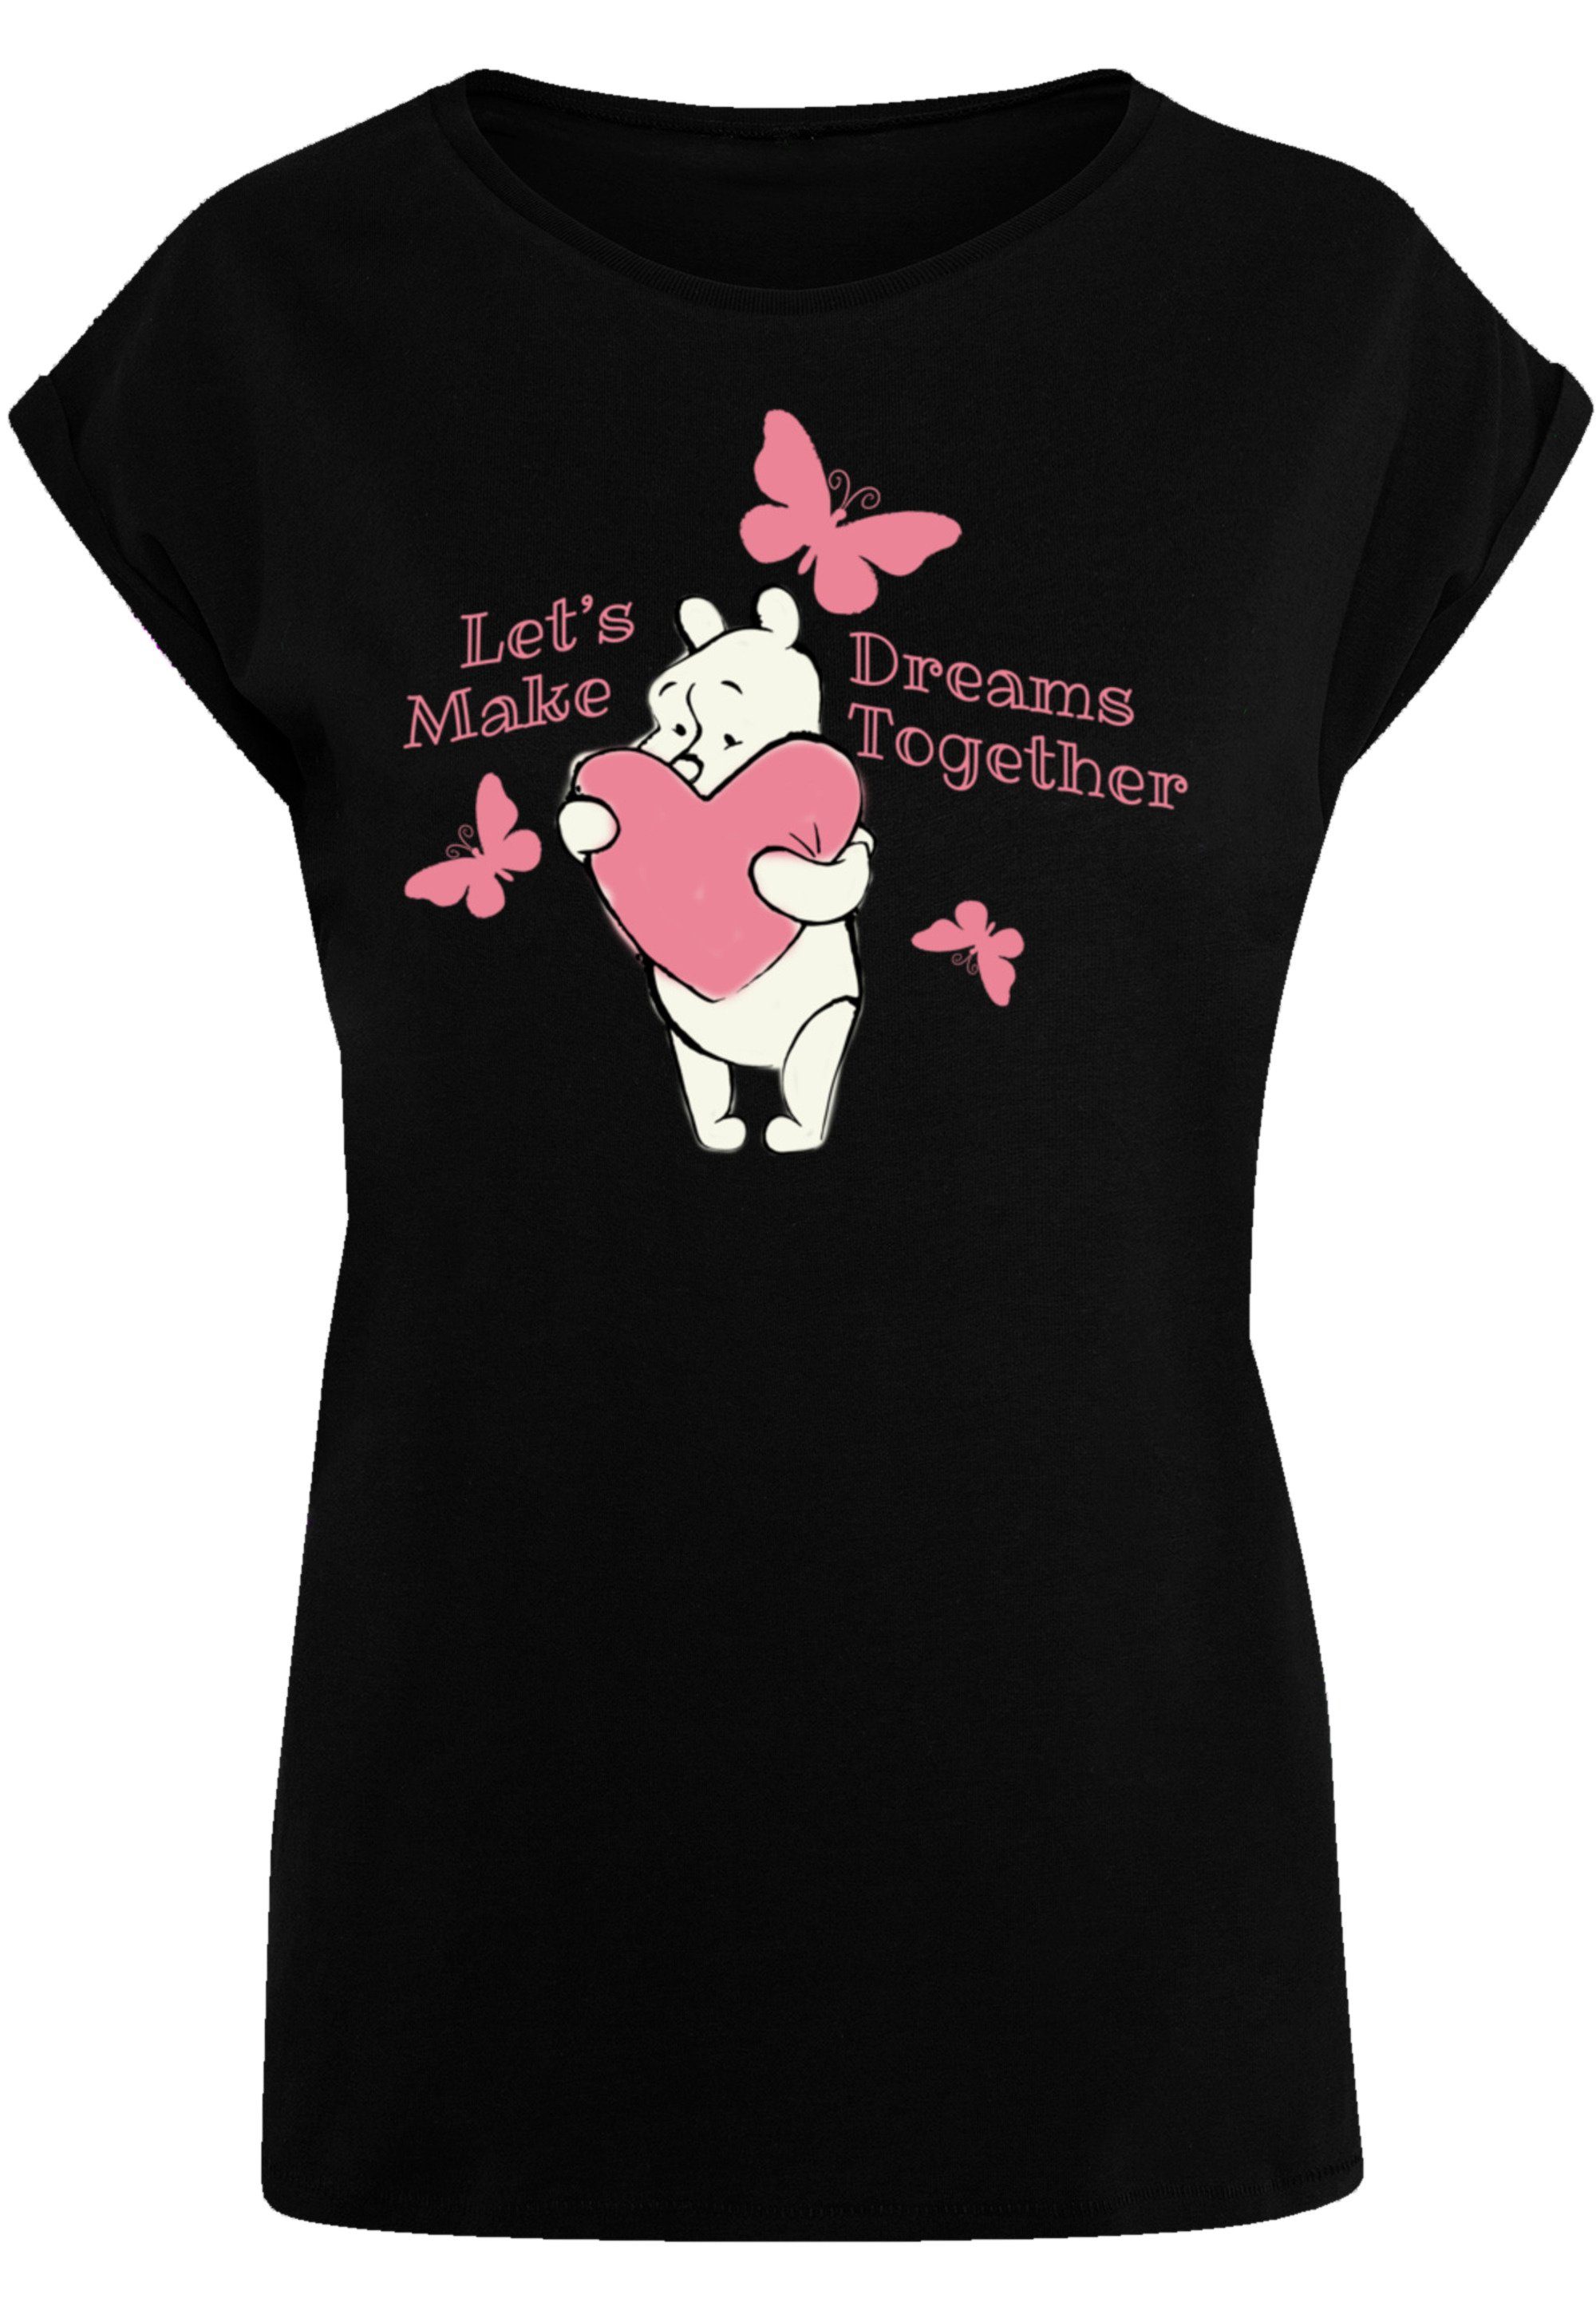 Qualität T-Shirt F4NT4STIC Puuh Together Premium Dreams Winnie Make Let's Disney